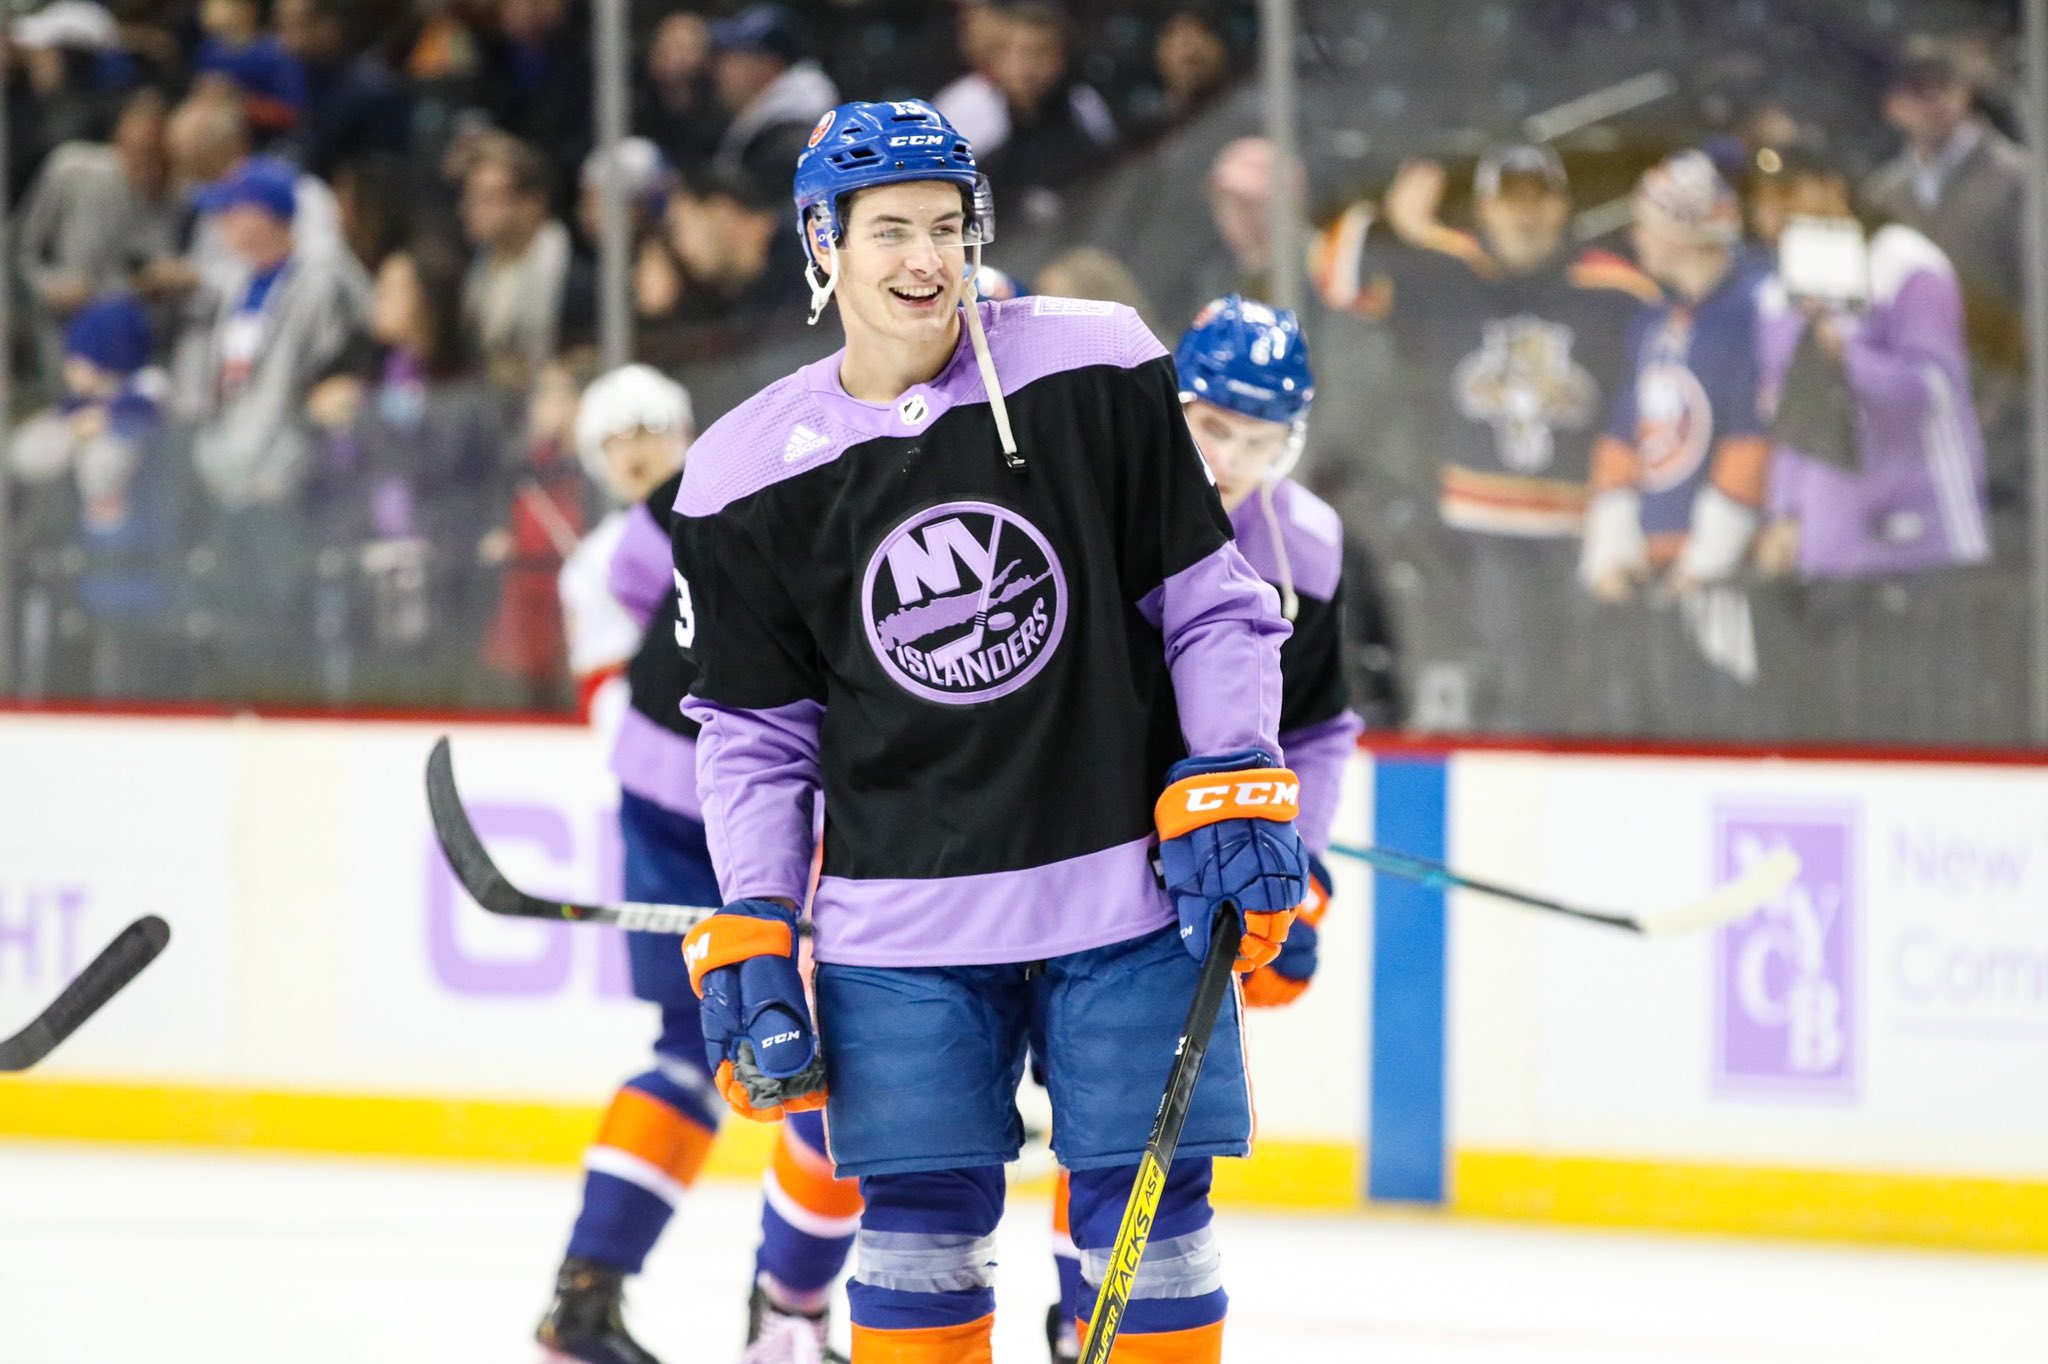 New York Islanders Hockey Fight Cancer Jersey